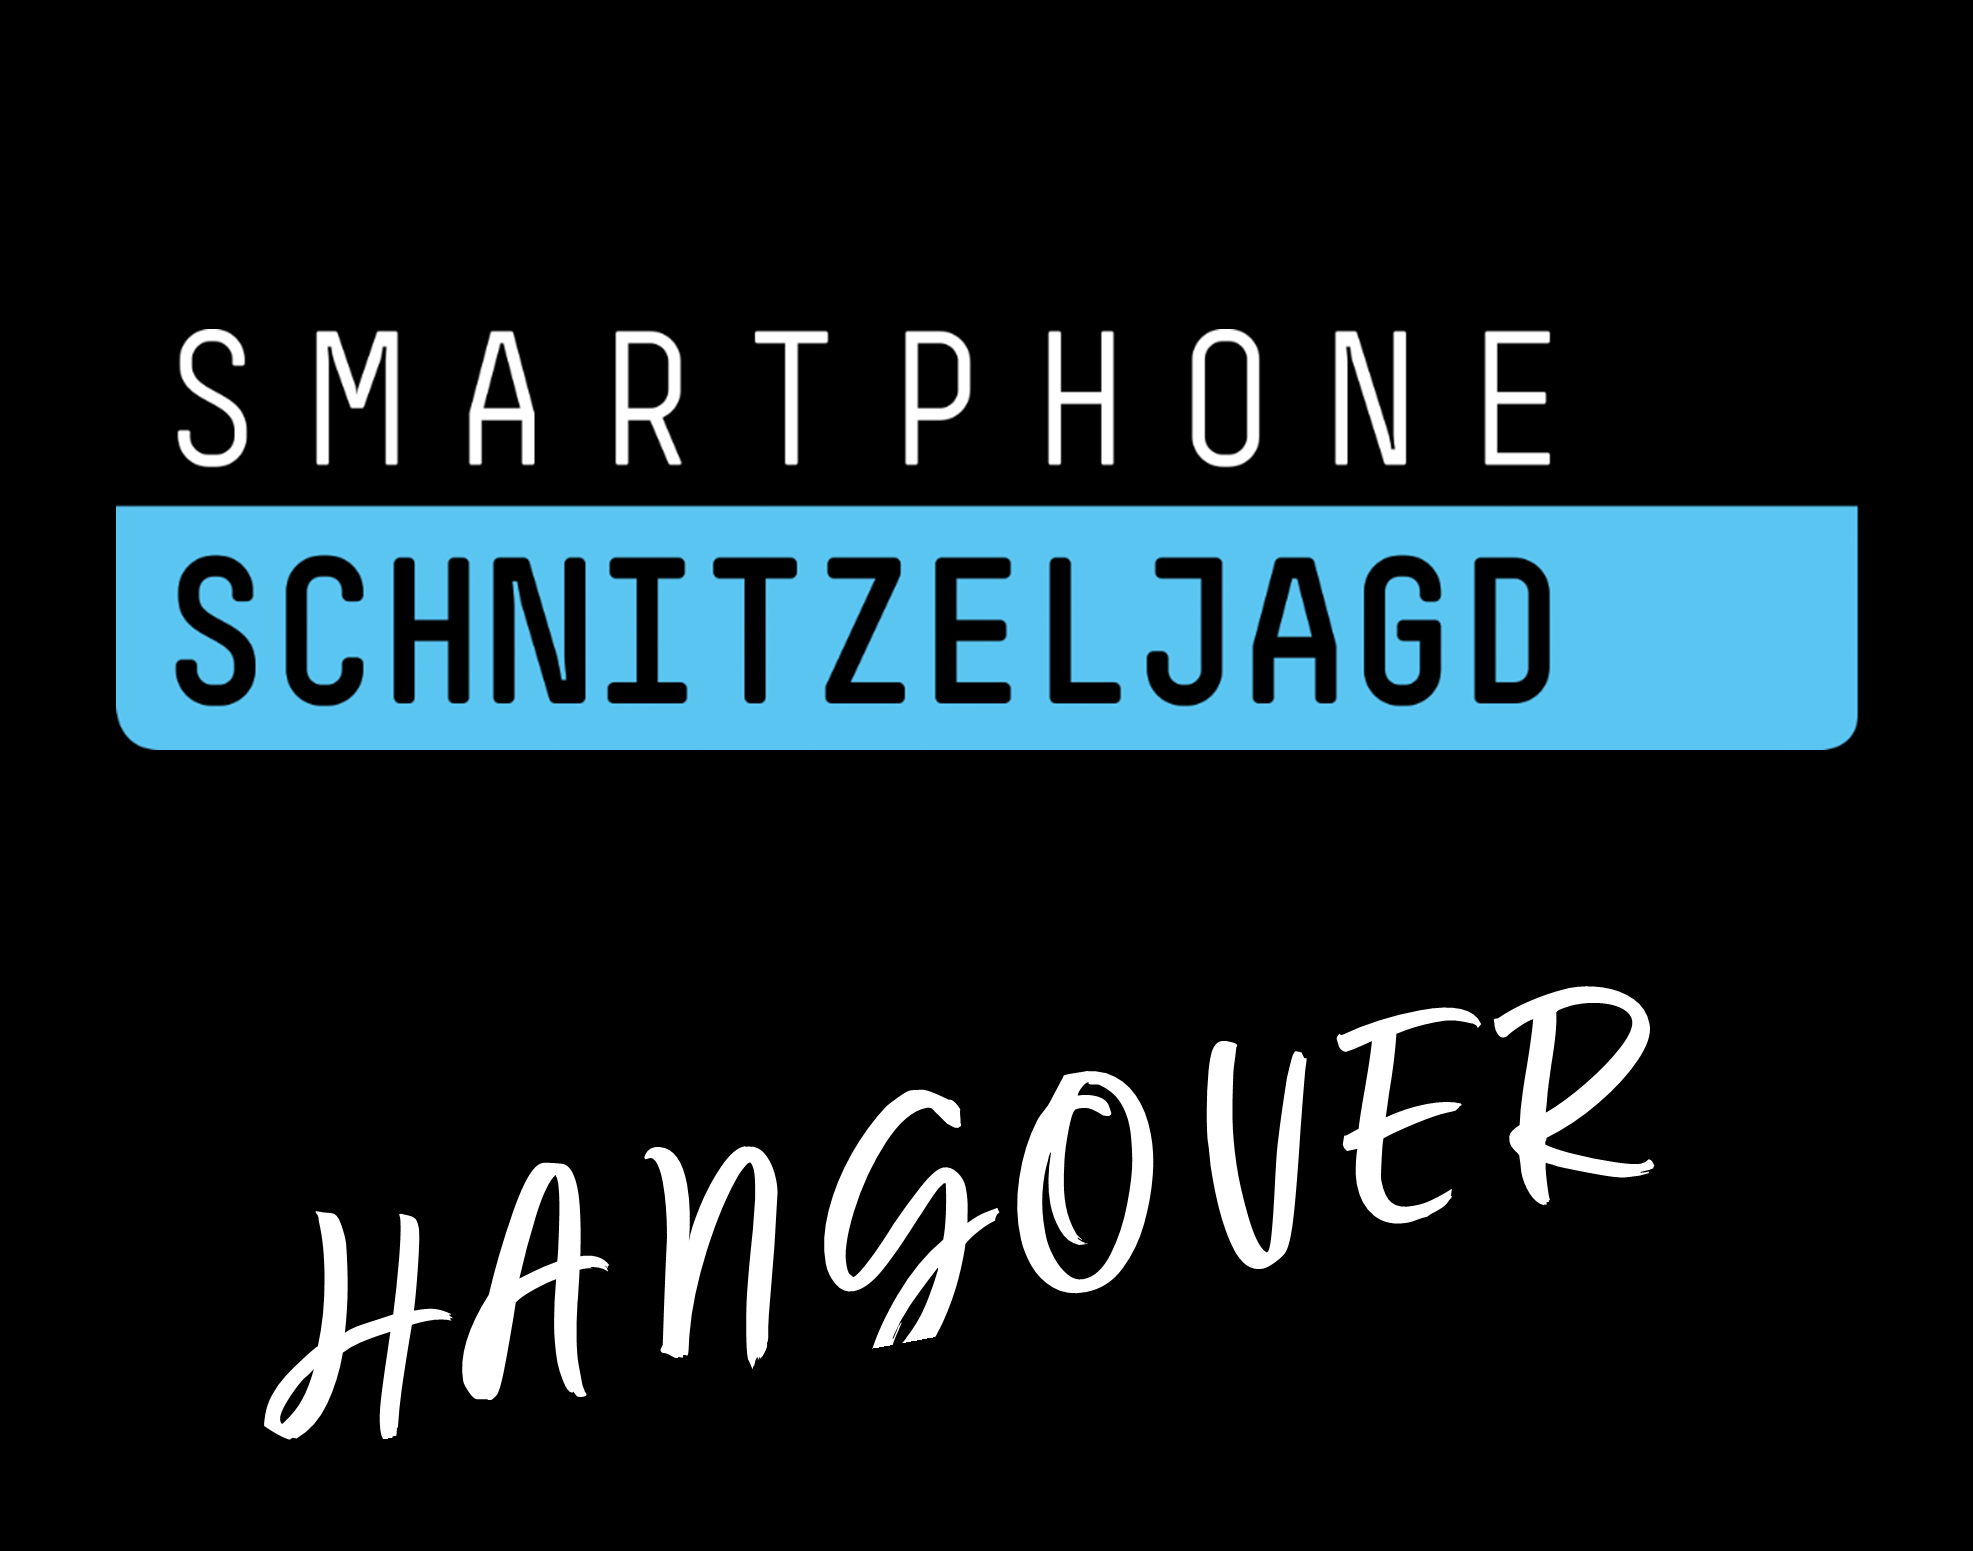 Smartphone Schnitzeljagd Hangover